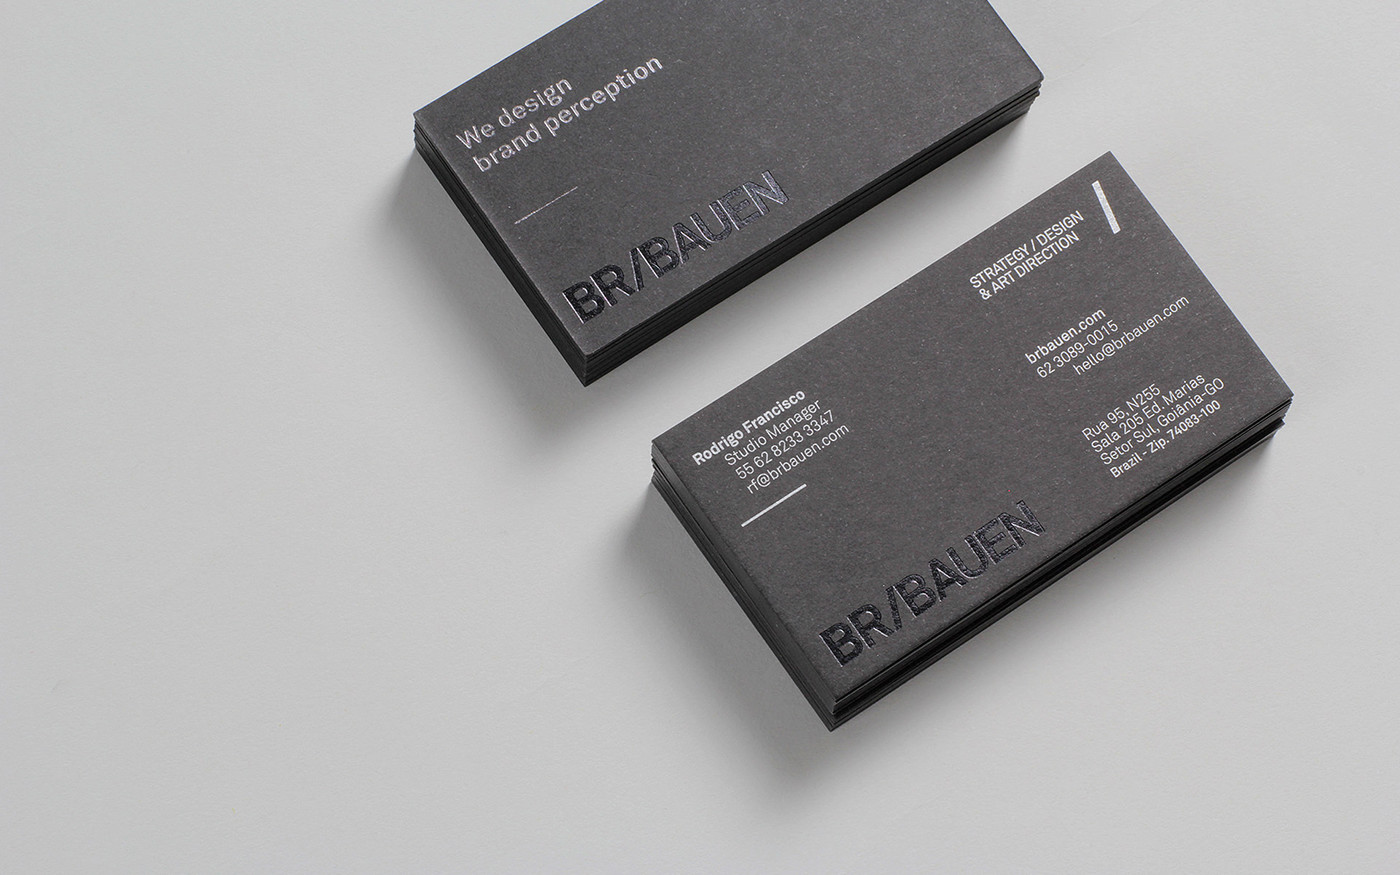 brbauen br/bauen brand identity design studio Brasil Brazil stationary video reel